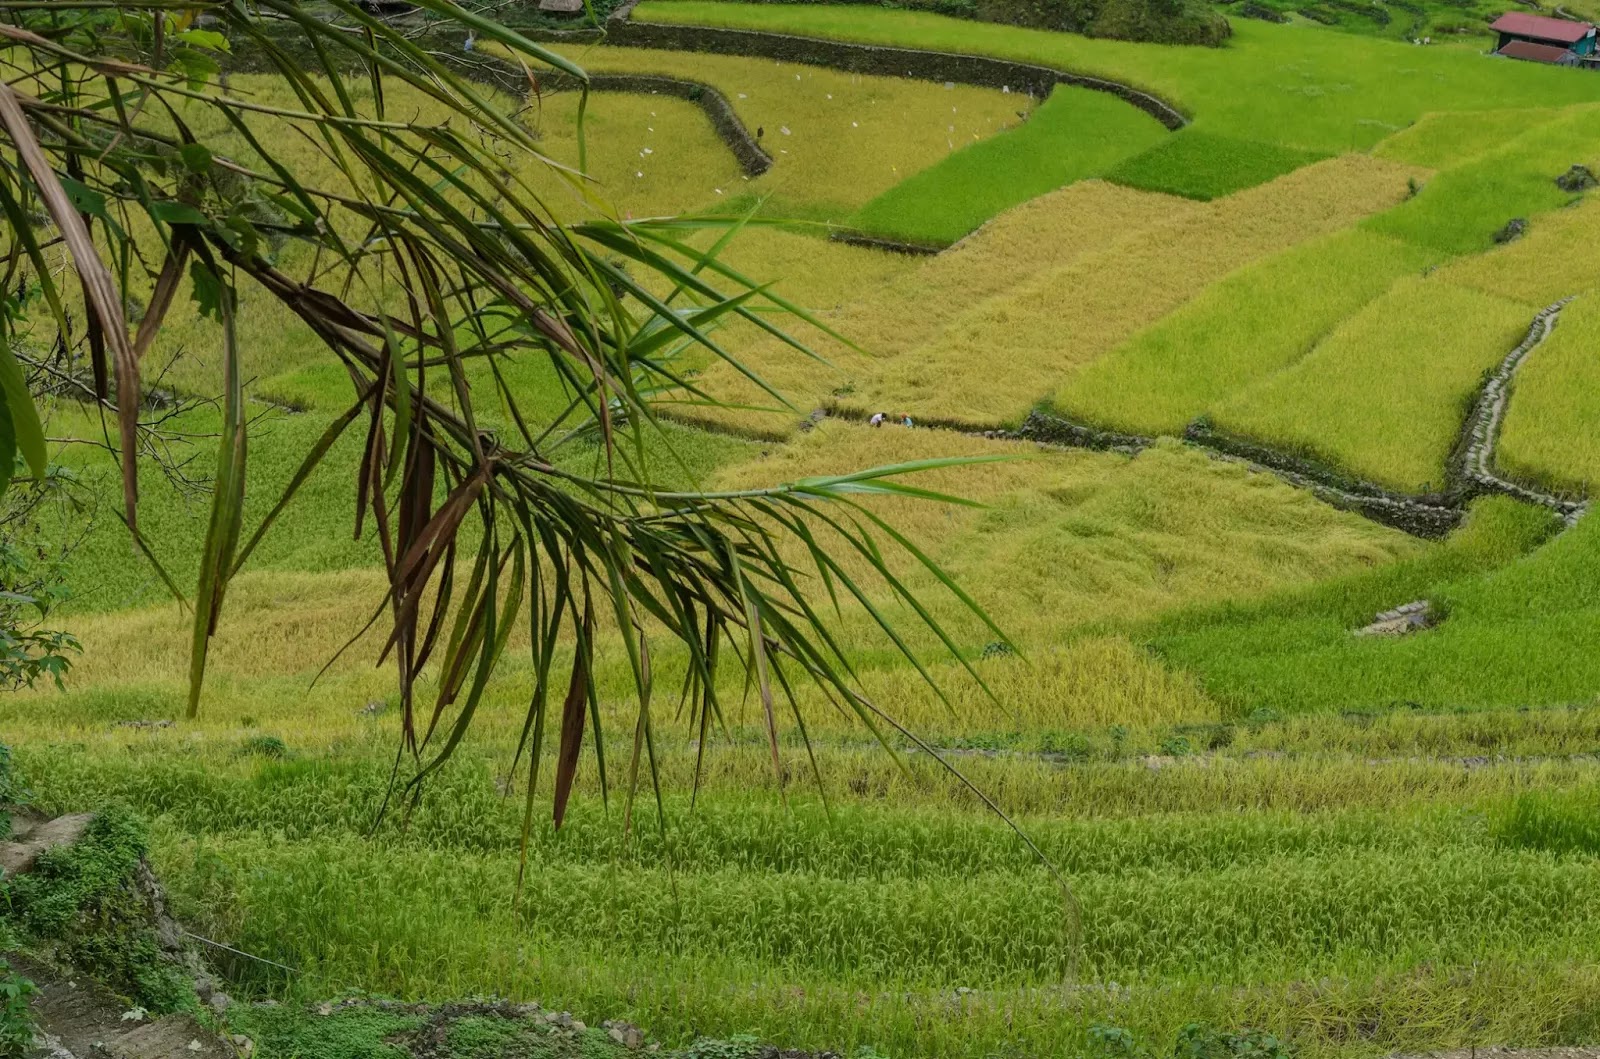 A Batad Rice Terraces Fields of Gold Ifugao Cordillera Administrative Region Philippines 